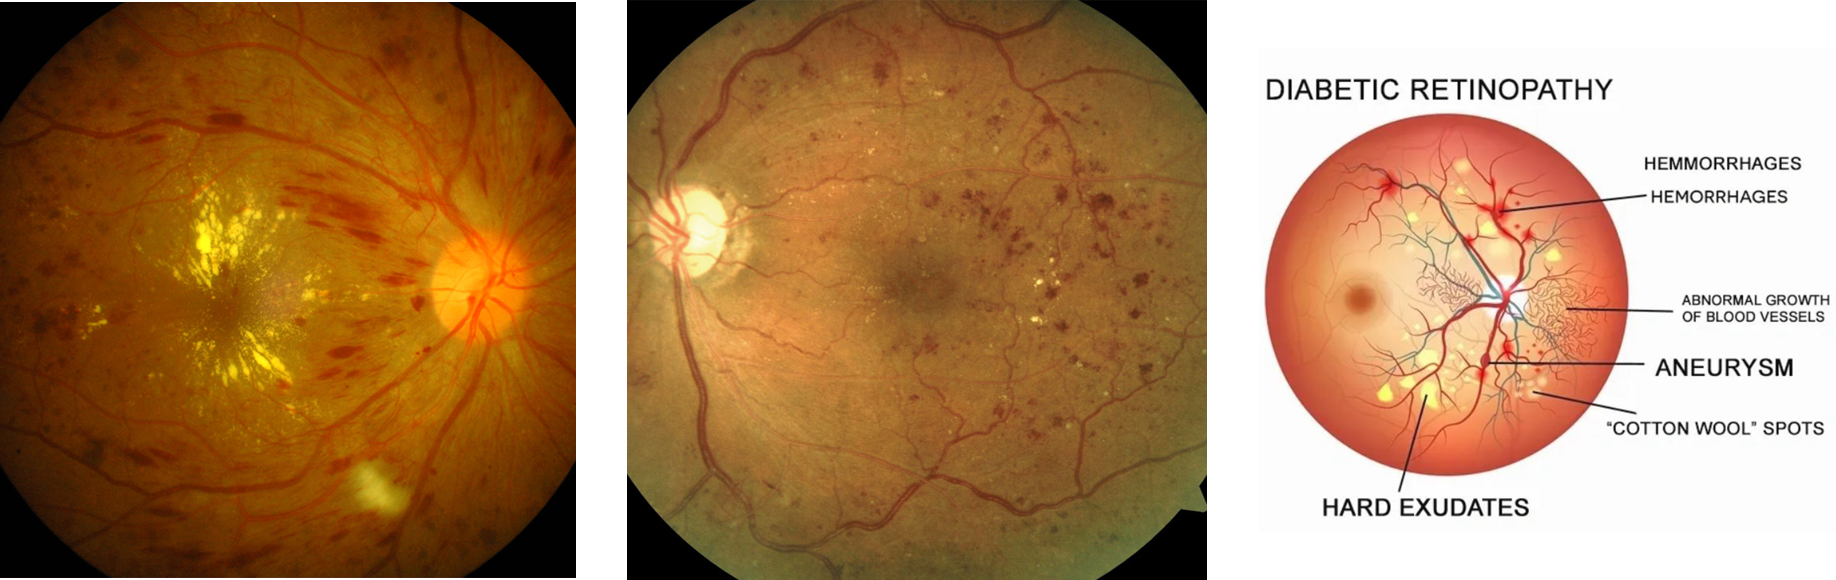 photo - diabetic retinopathy